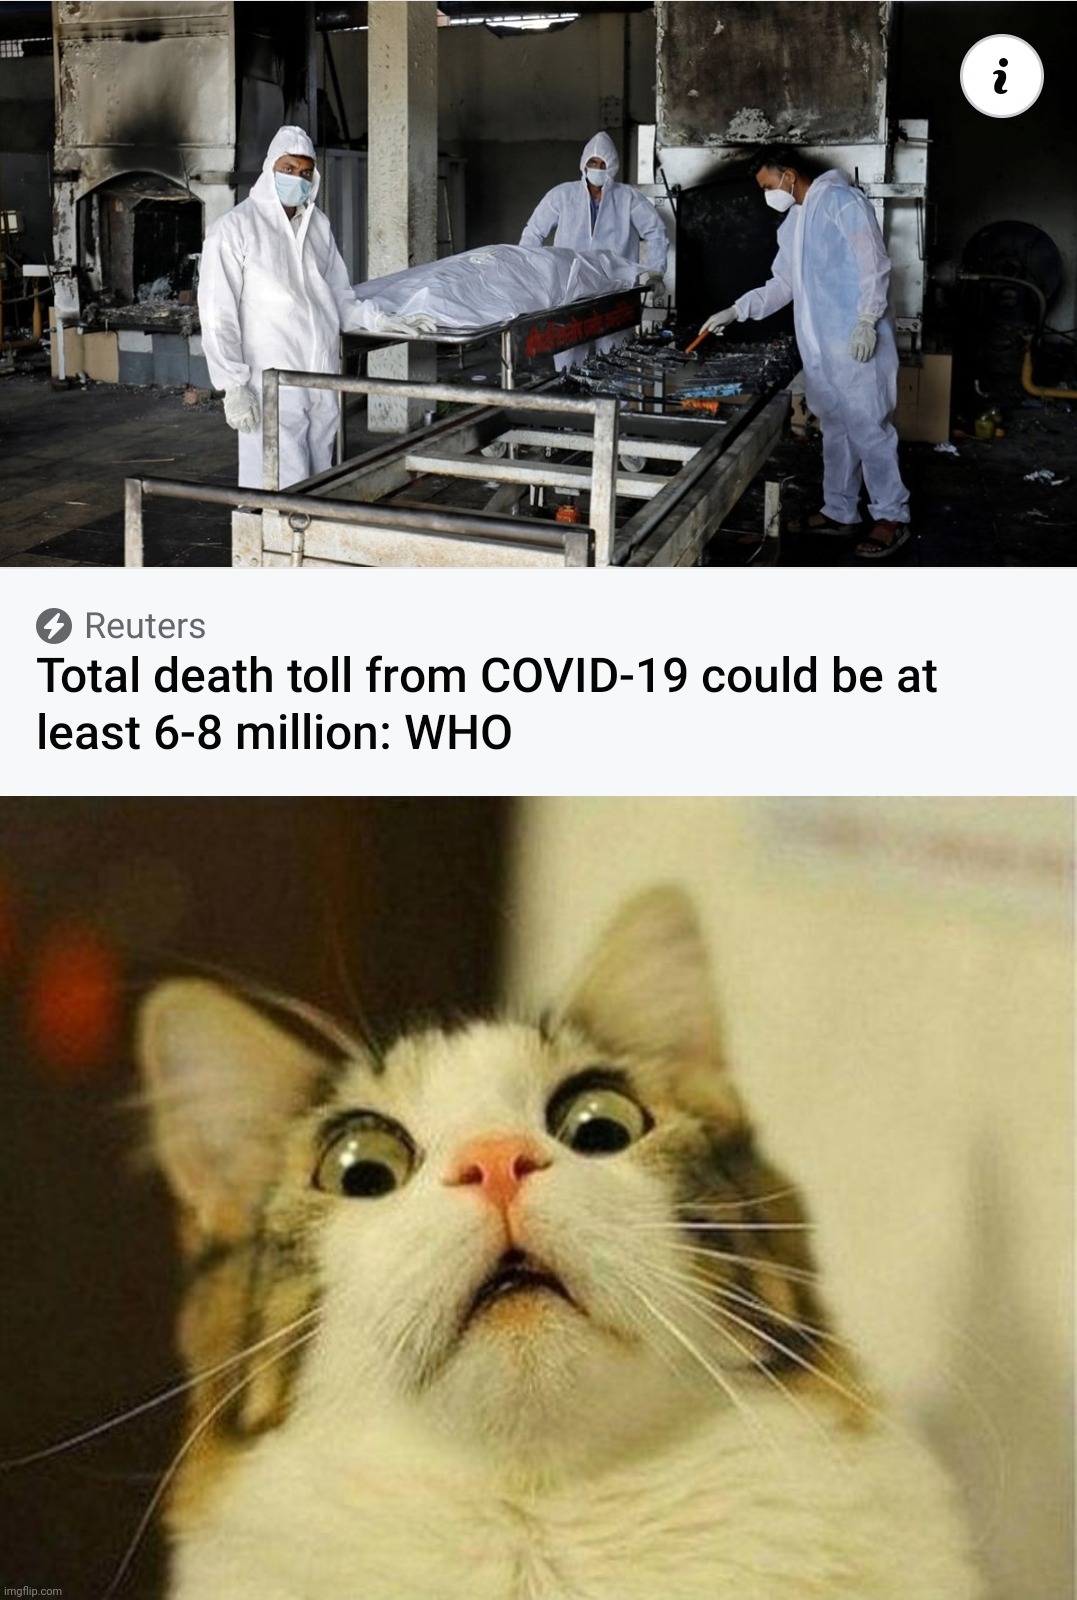 OOOH NOOOOOOOOOO!!! | image tagged in memes,scared cat,covid-19,coronavirus,death,pandemic | made w/ Imgflip meme maker